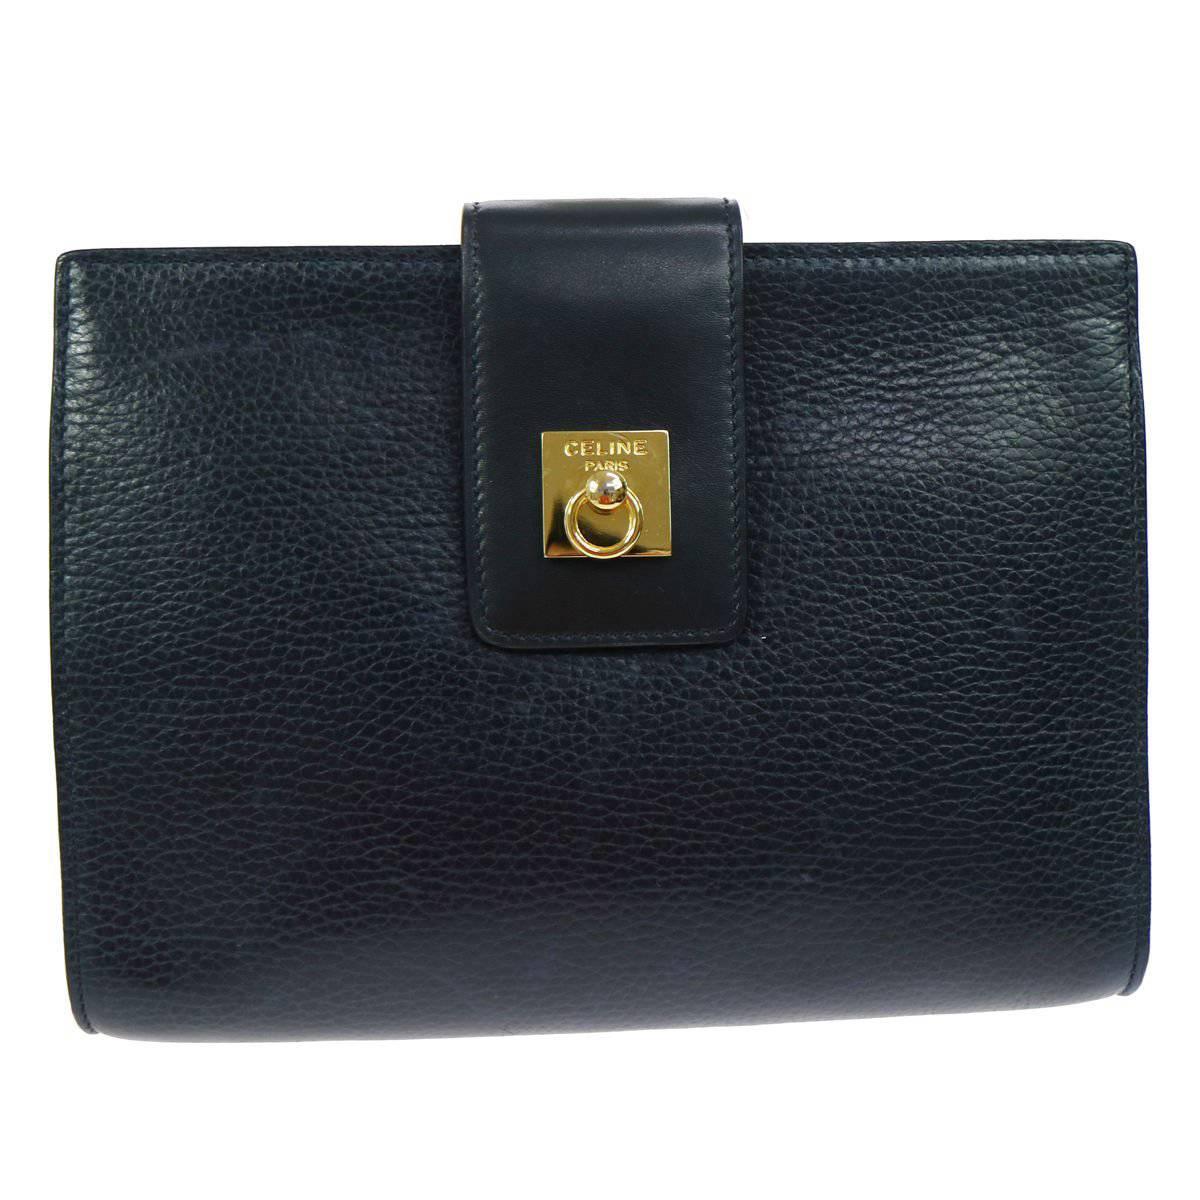 Celine Navy Blue Leather Toggle Gold Flap Evening Clutch Bag